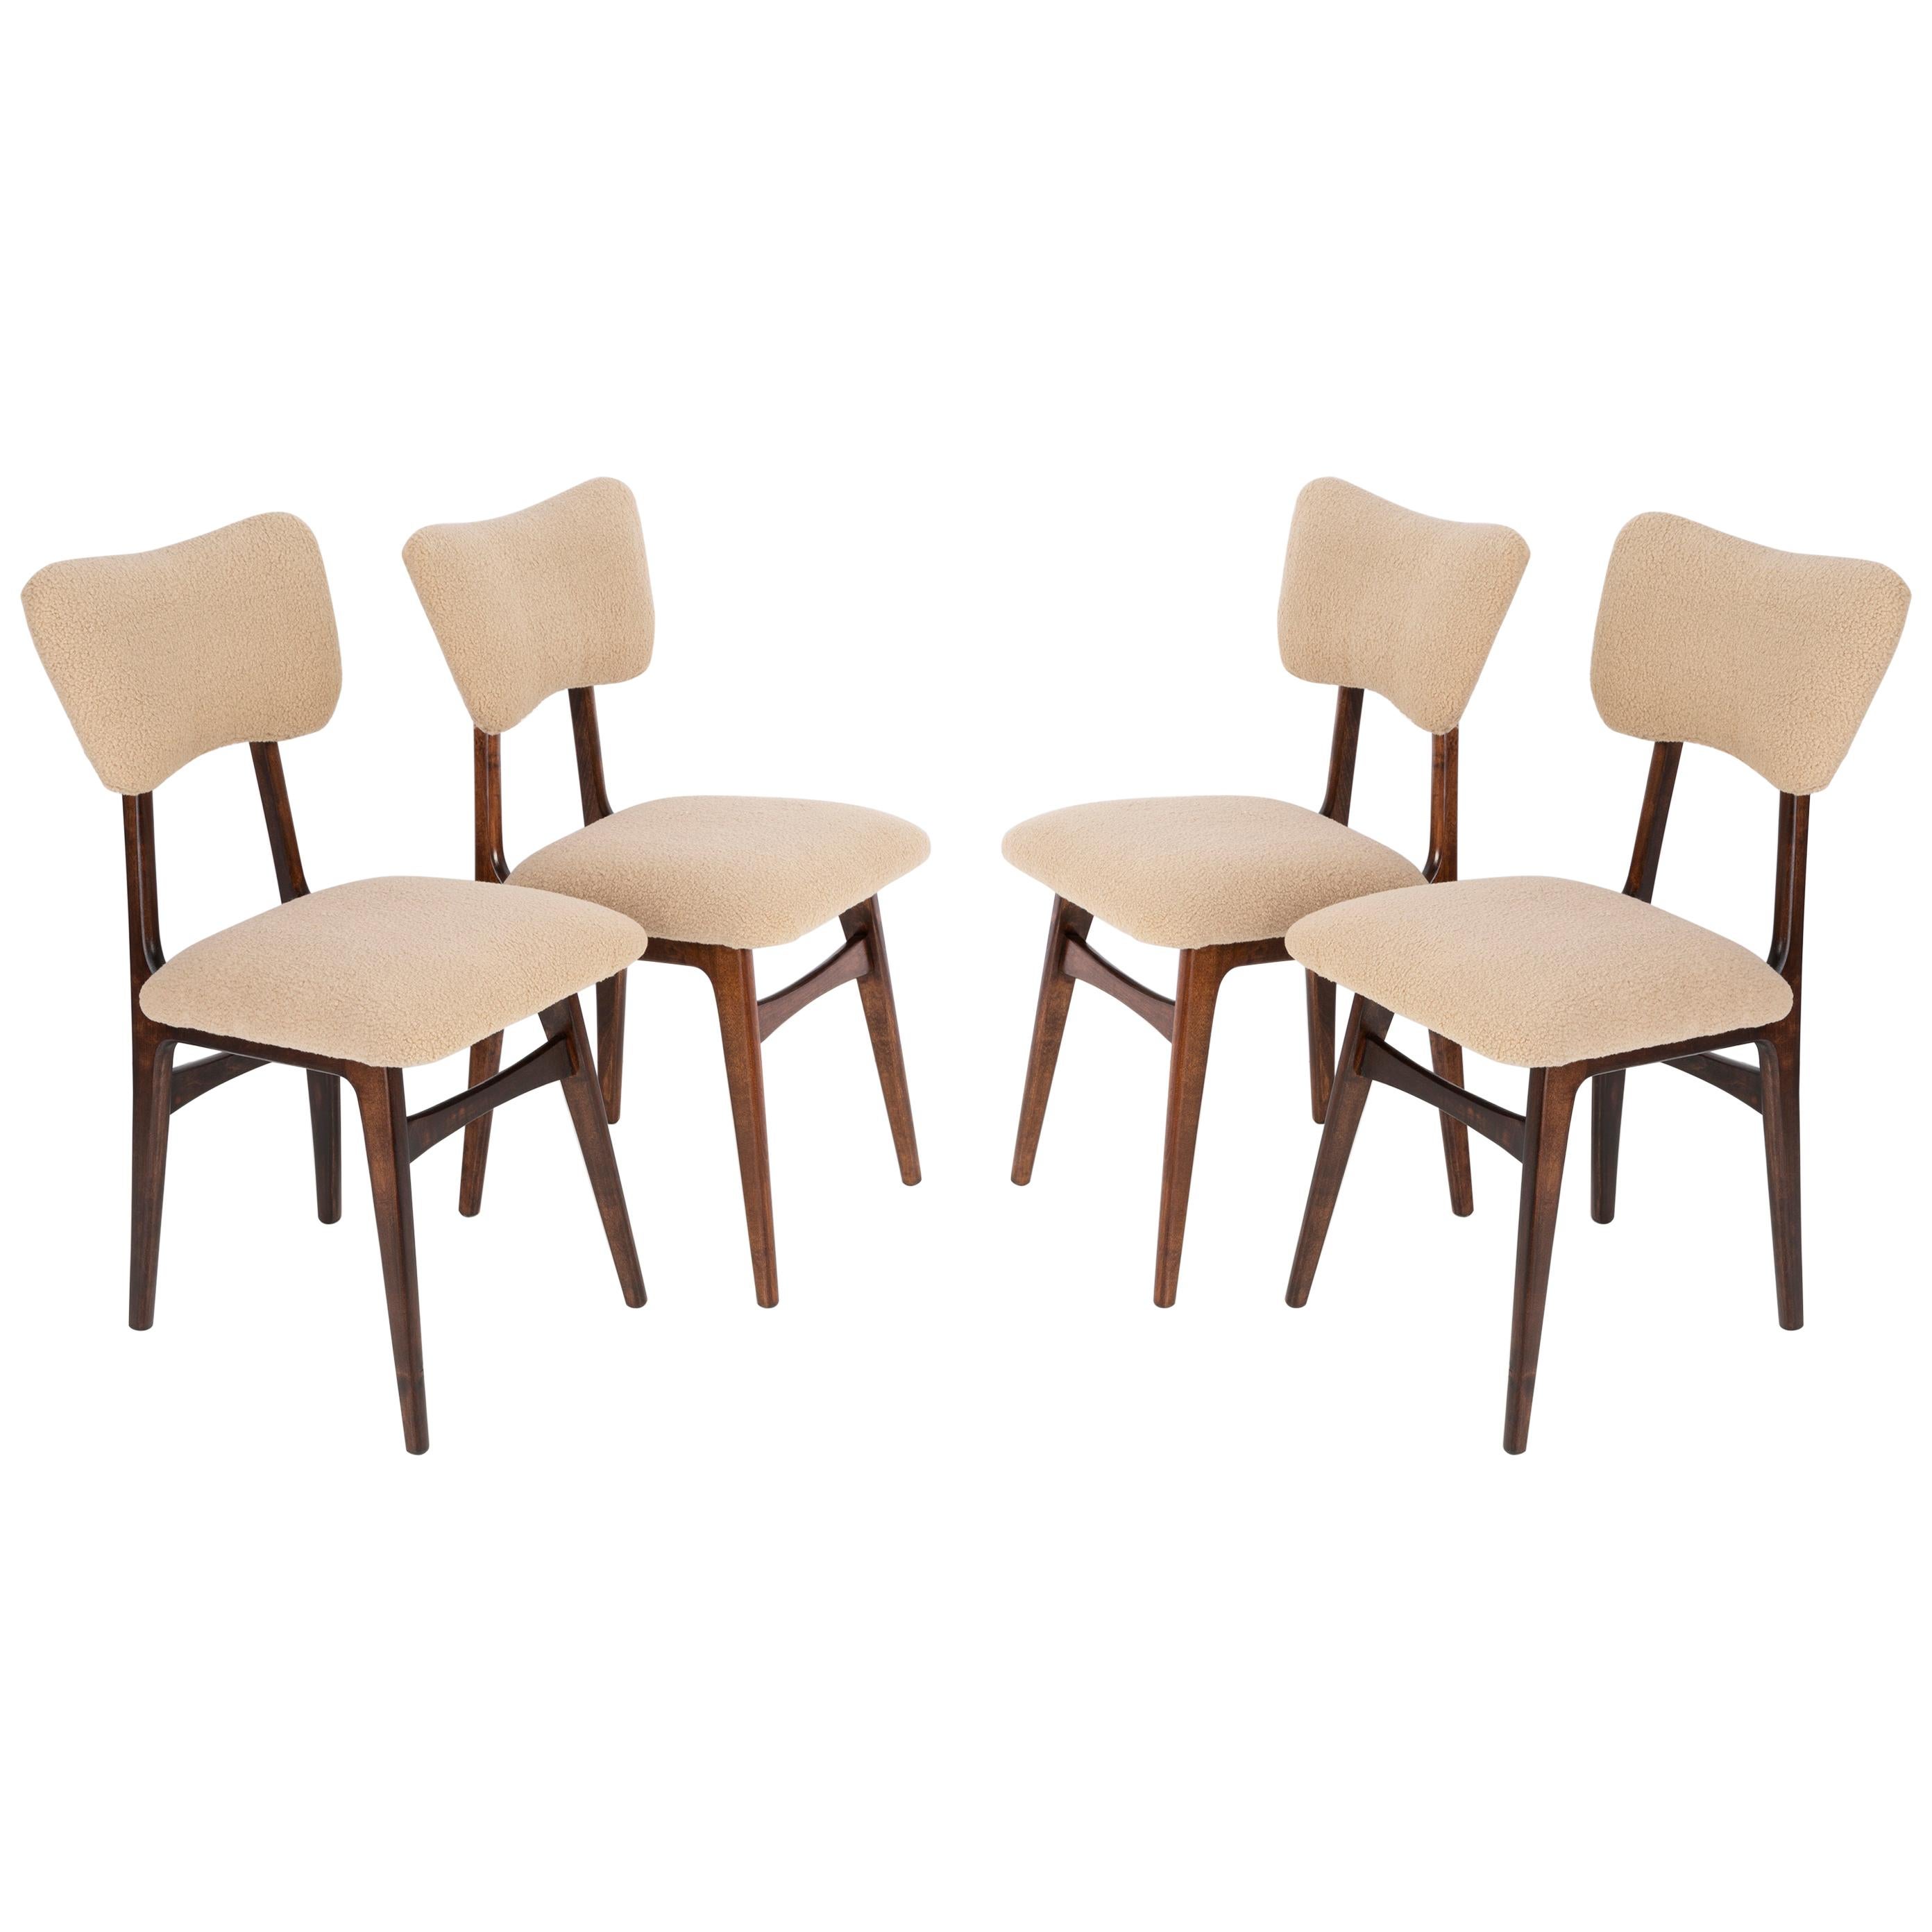 Set aus vier Kamel-Bouclé-Stühlen des 20. Jahrhunderts, 1960er Jahre